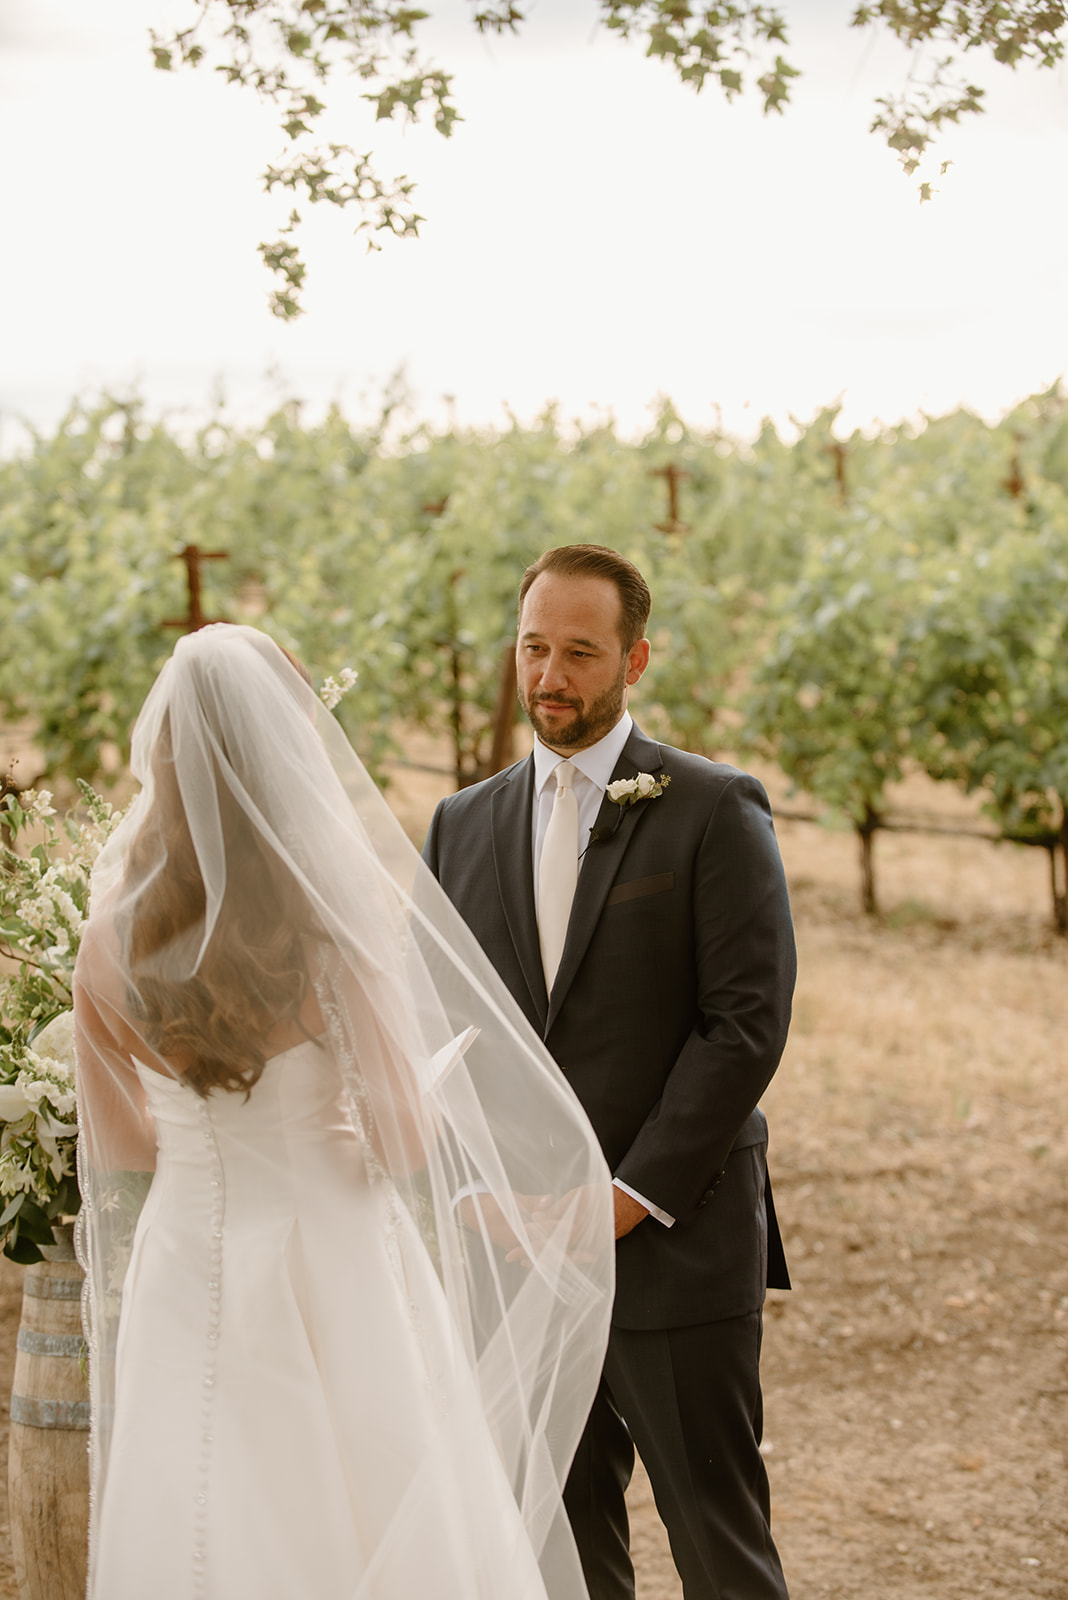 Sydney Jai Photography - Napa Valley Wedding Photographer, wedding ceremony, bride and groom photos, winery wedding venue, vineyard wedding venue